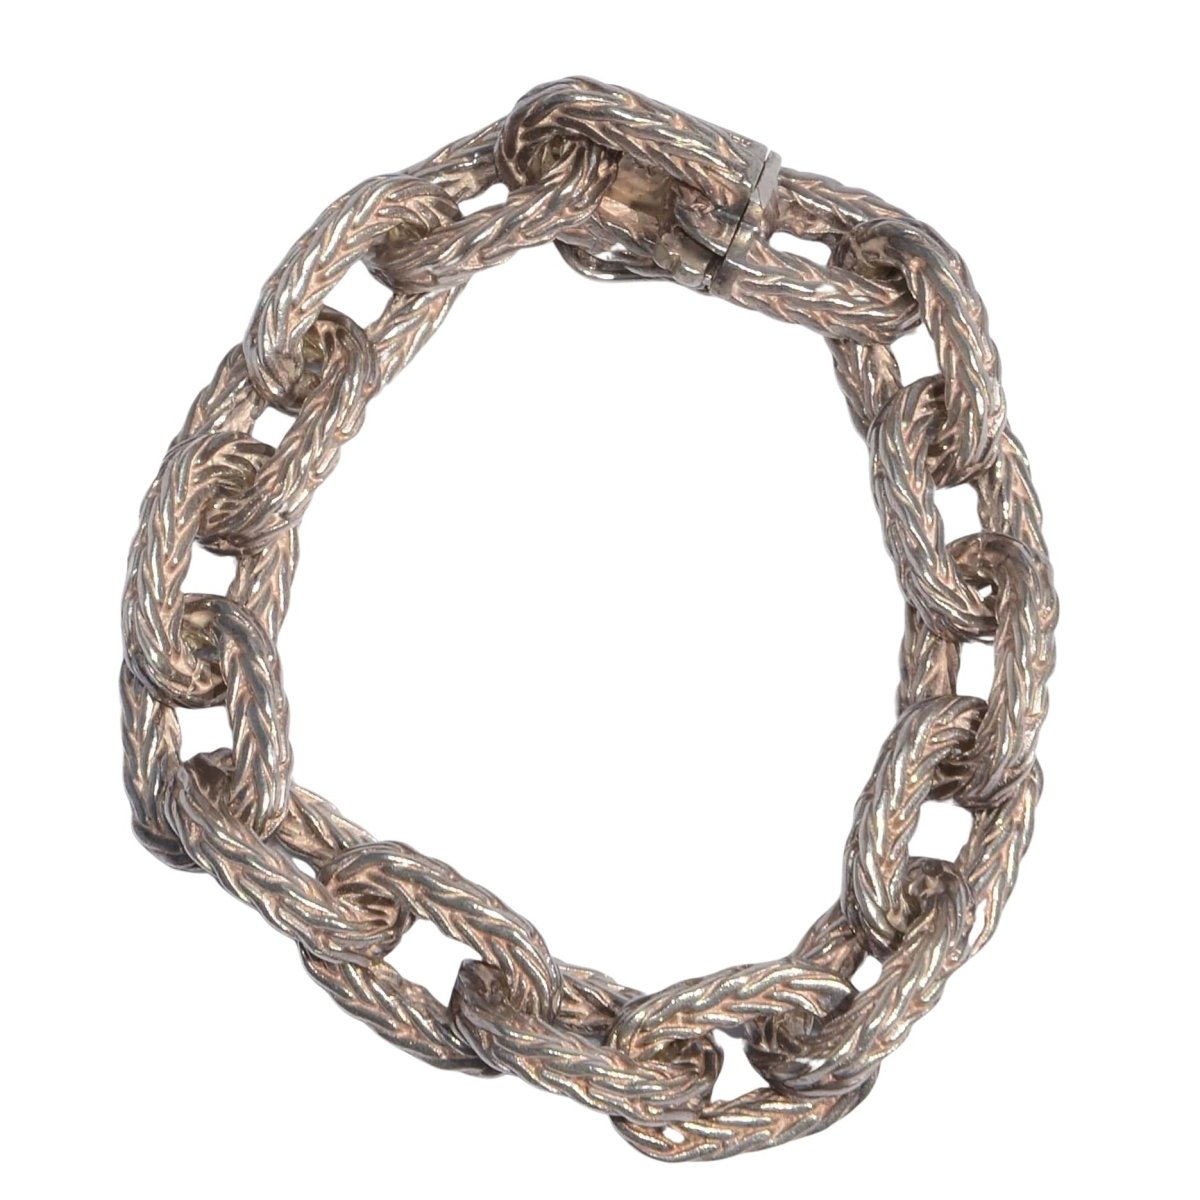 Bracelet in silver Hermès mesh braided